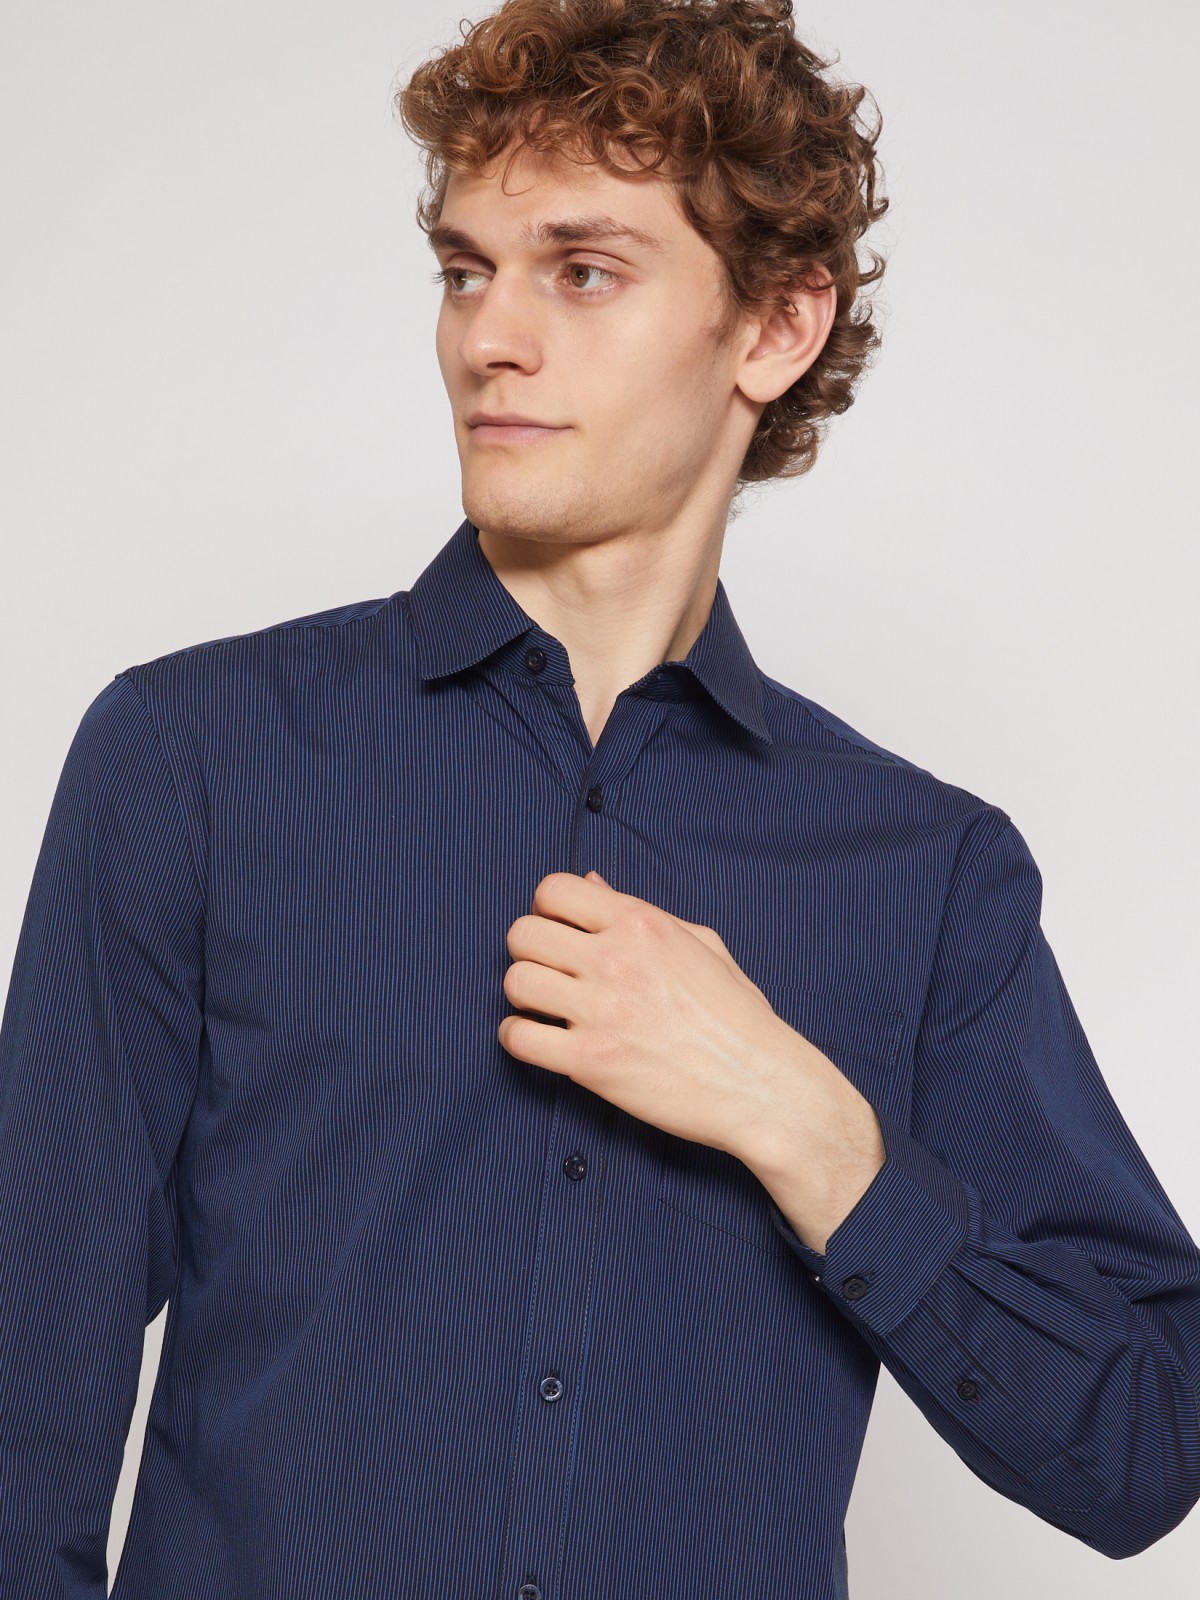 Рубашка с узором в тонкую полоску zolla 011332162012, цвет темно-синий, размер S - фото 4